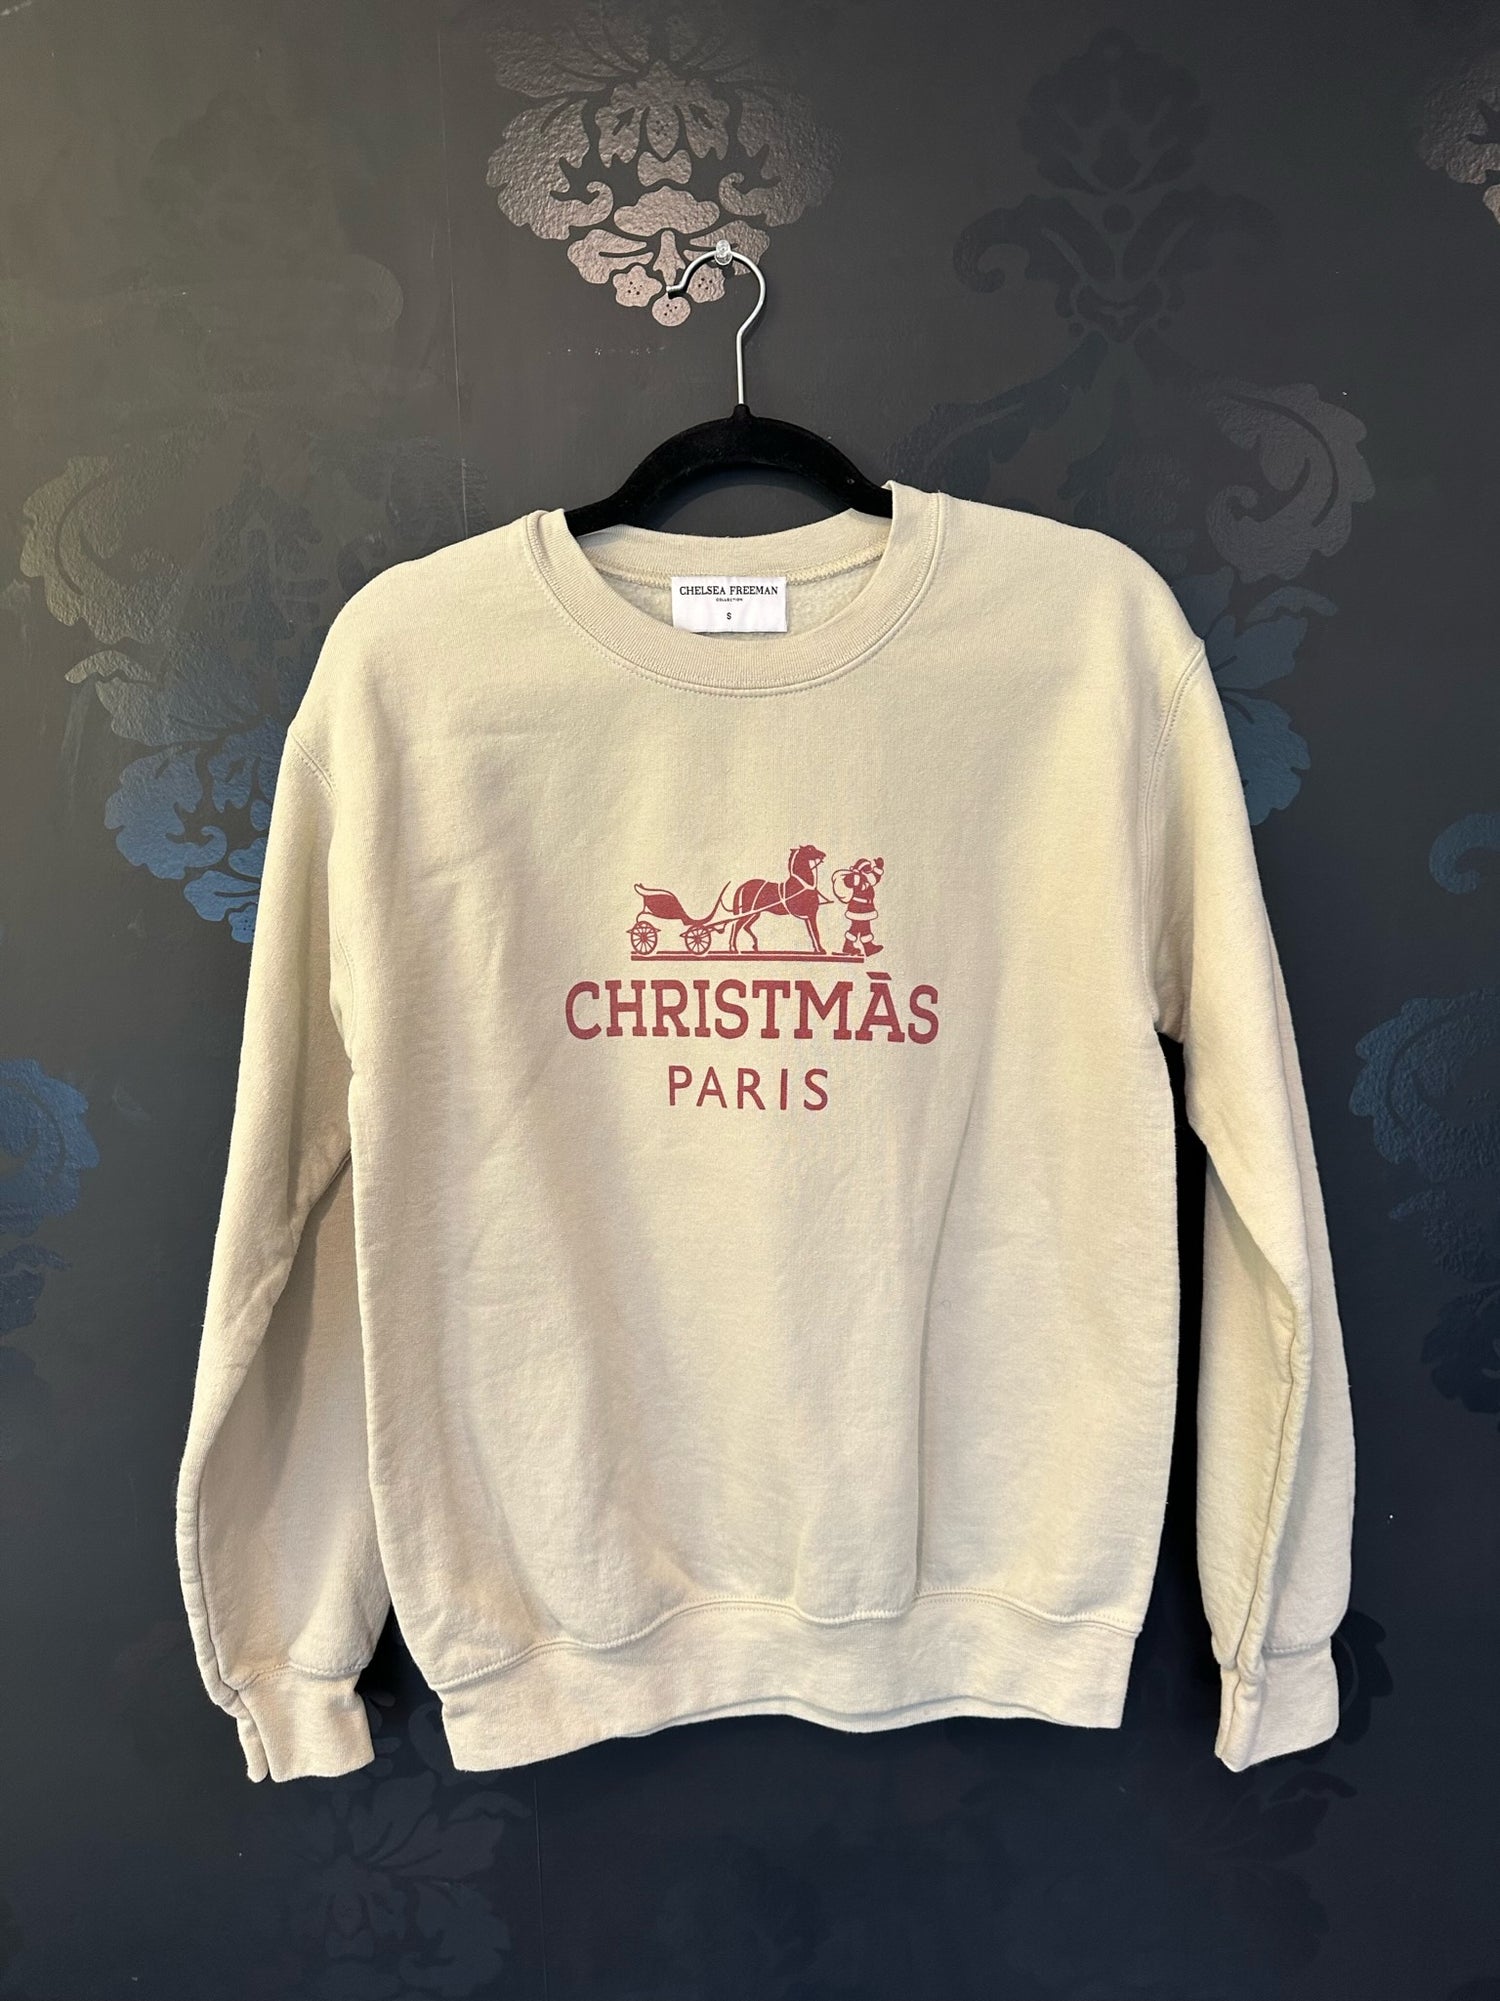 Size Small Cream Chelsea Freeman Christmas Paris Sweatshirt